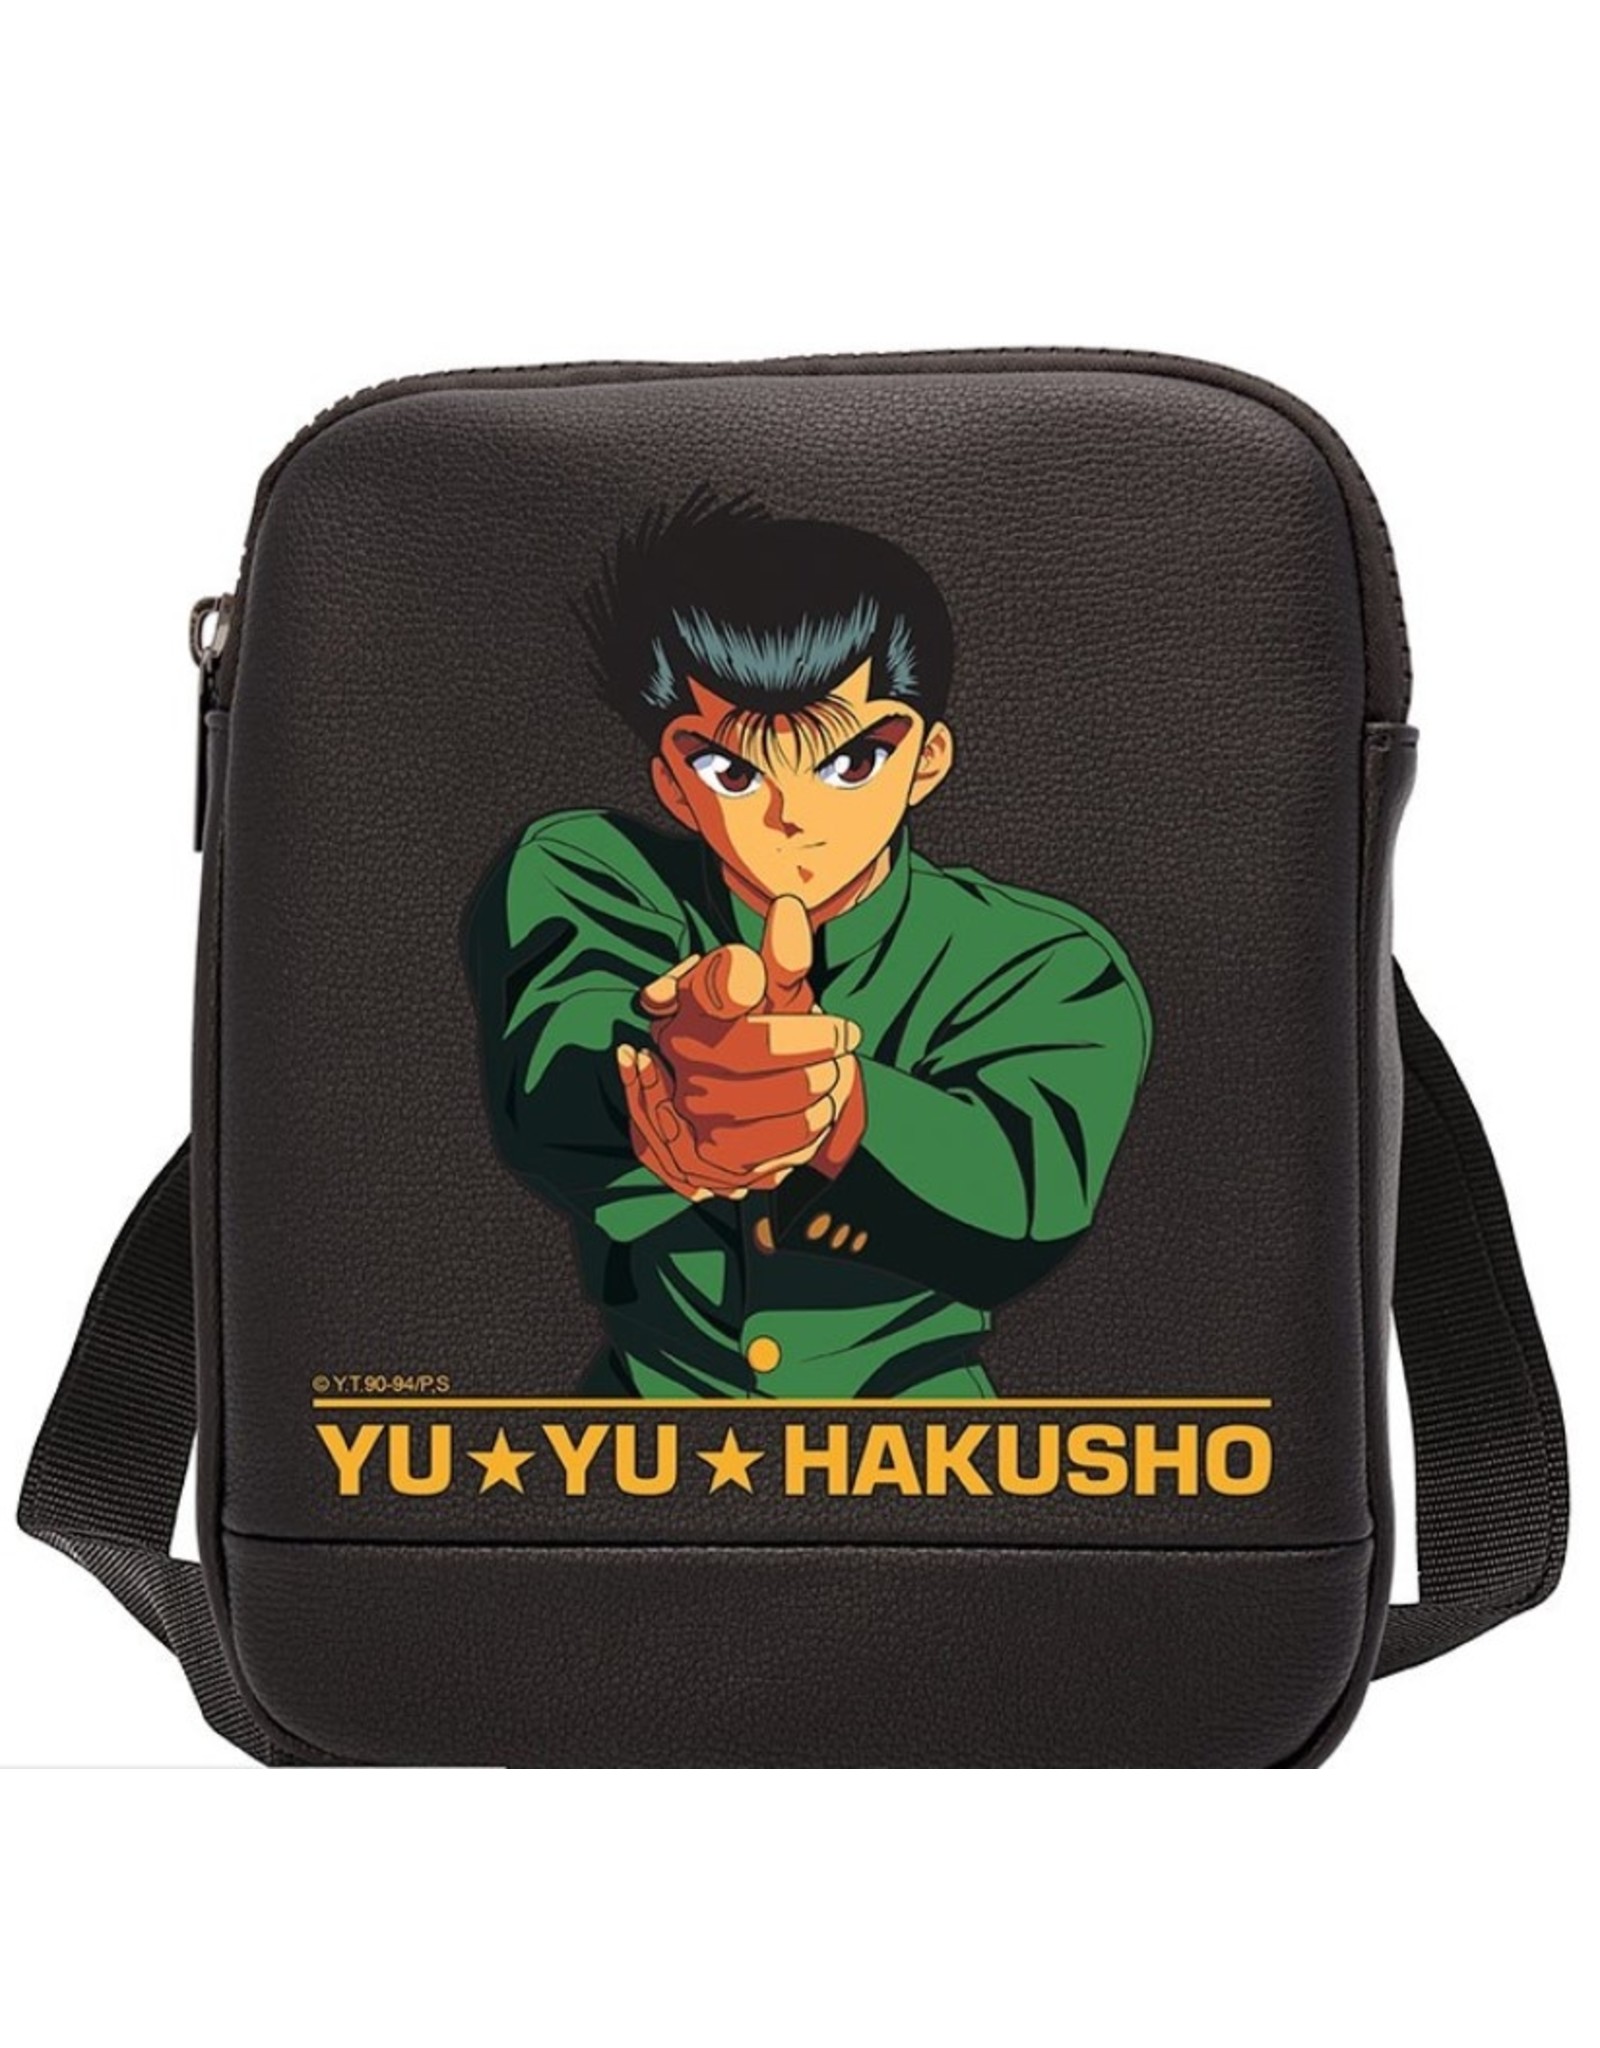 YU YU HAKUSHO Merchandise bags - YU YU HAKUSHO Crossbody Bag "Yusuke"